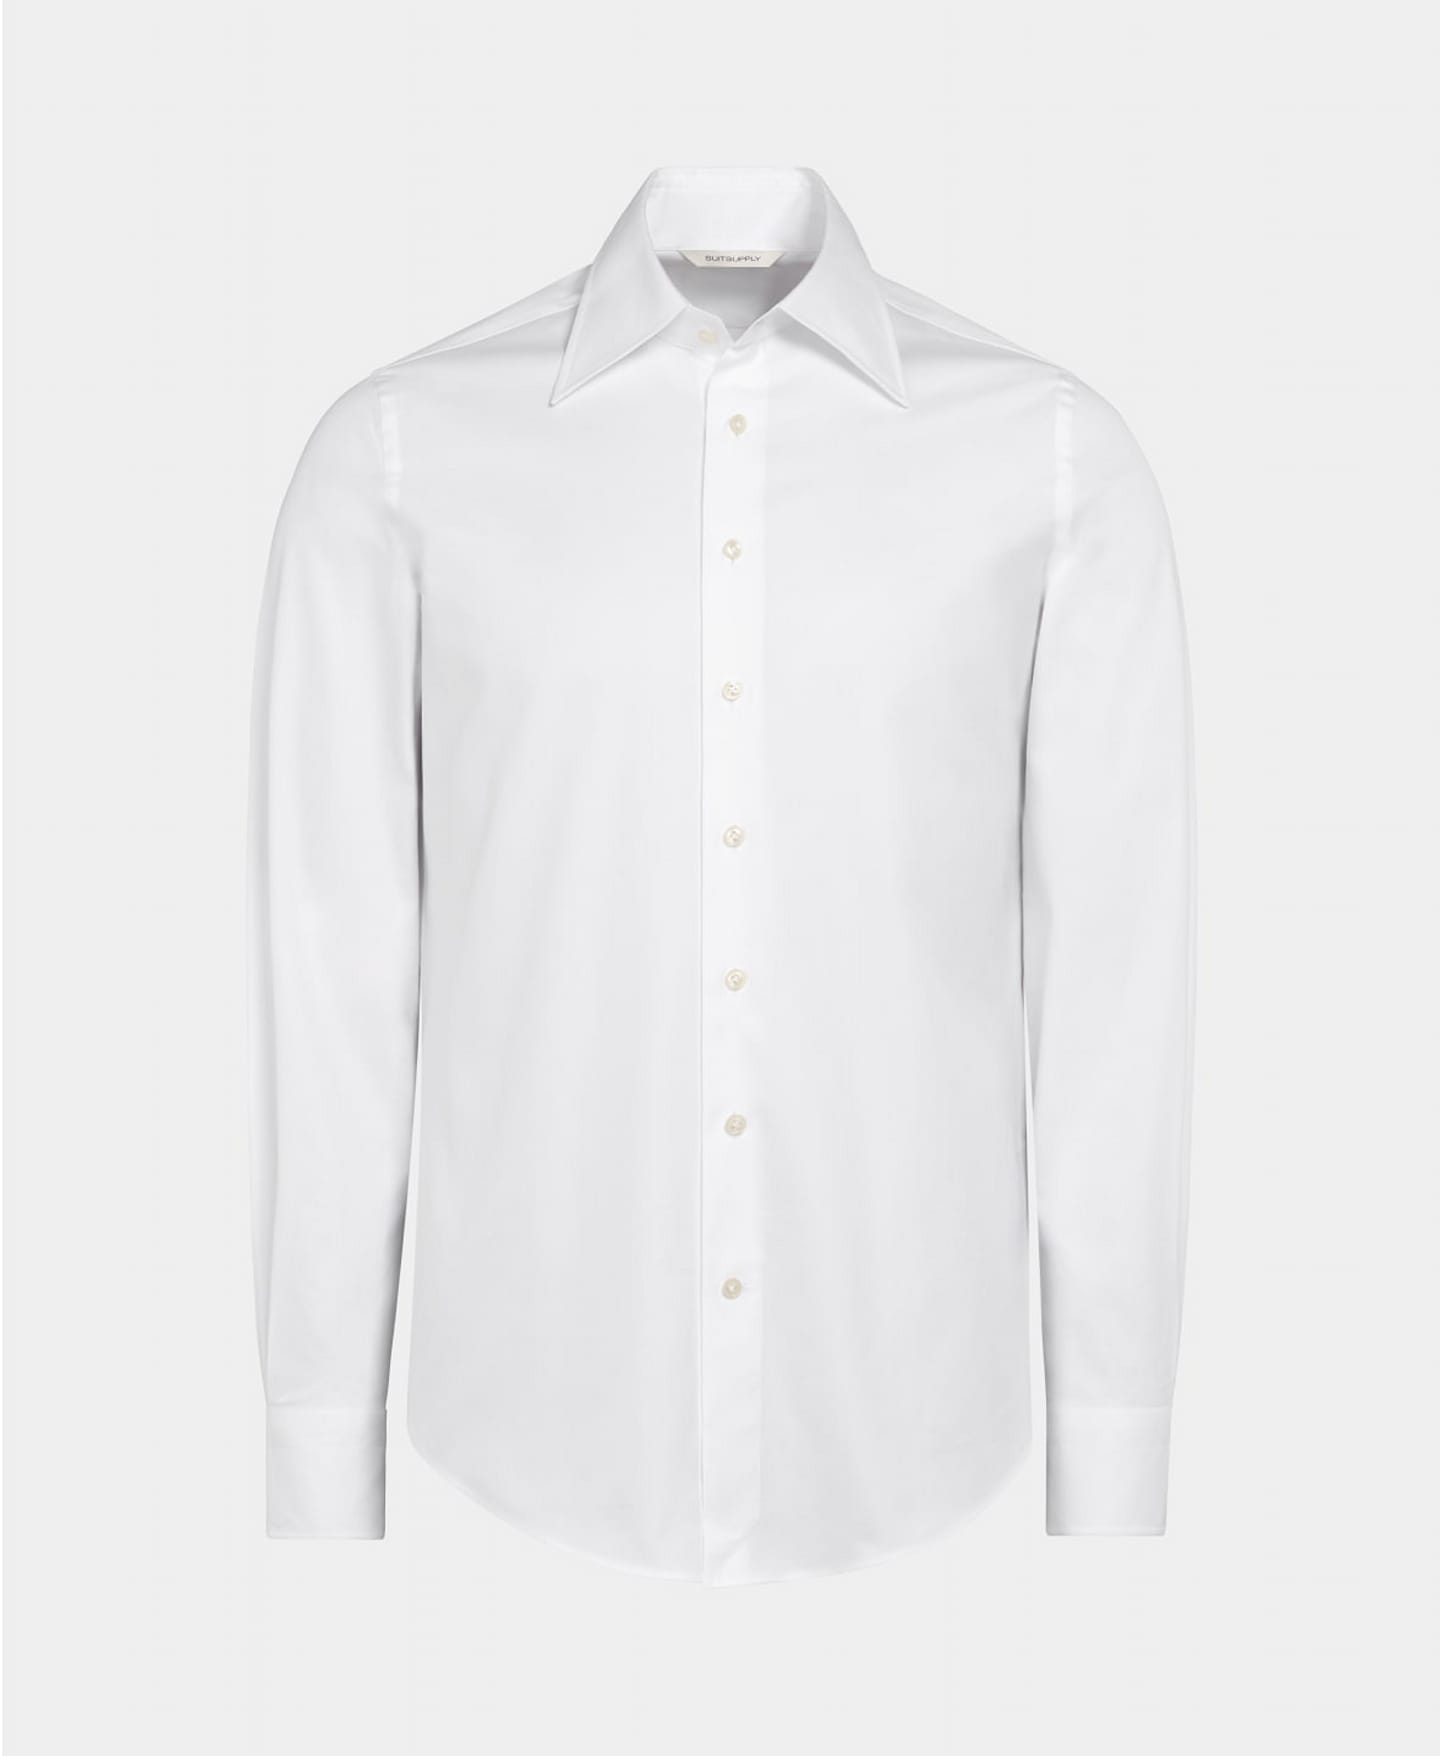 Camisa de vestir blanca.